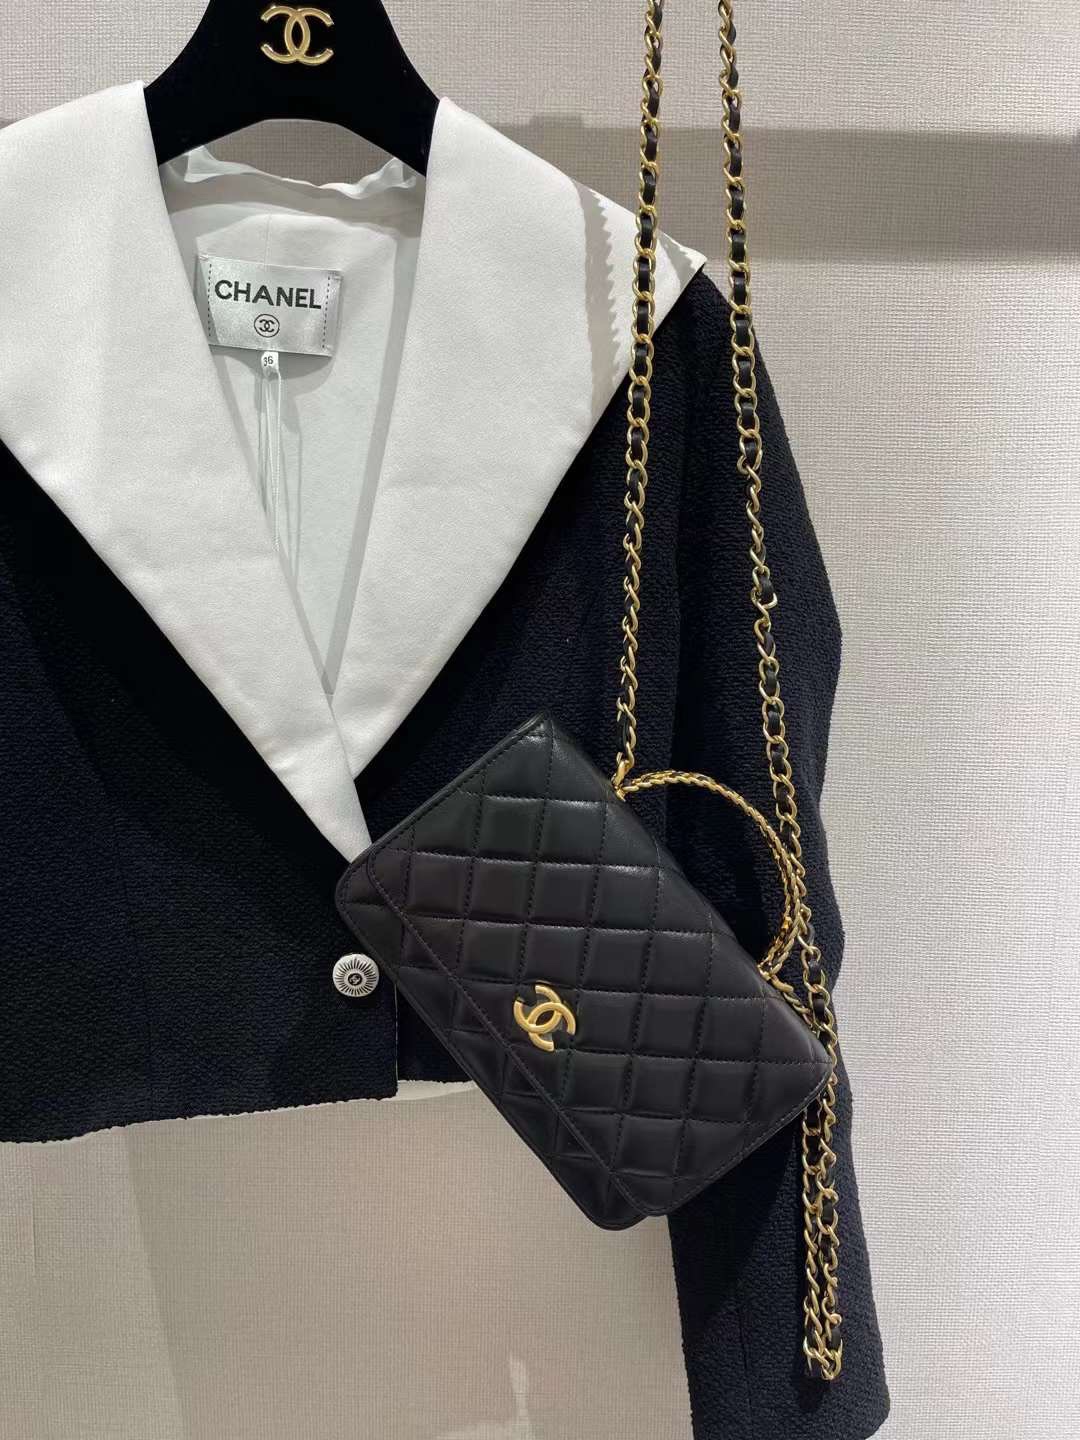 【P1200】香奈儿22年春夏新款包包 Chanel字母手柄Woc链条包 黑色羊皮